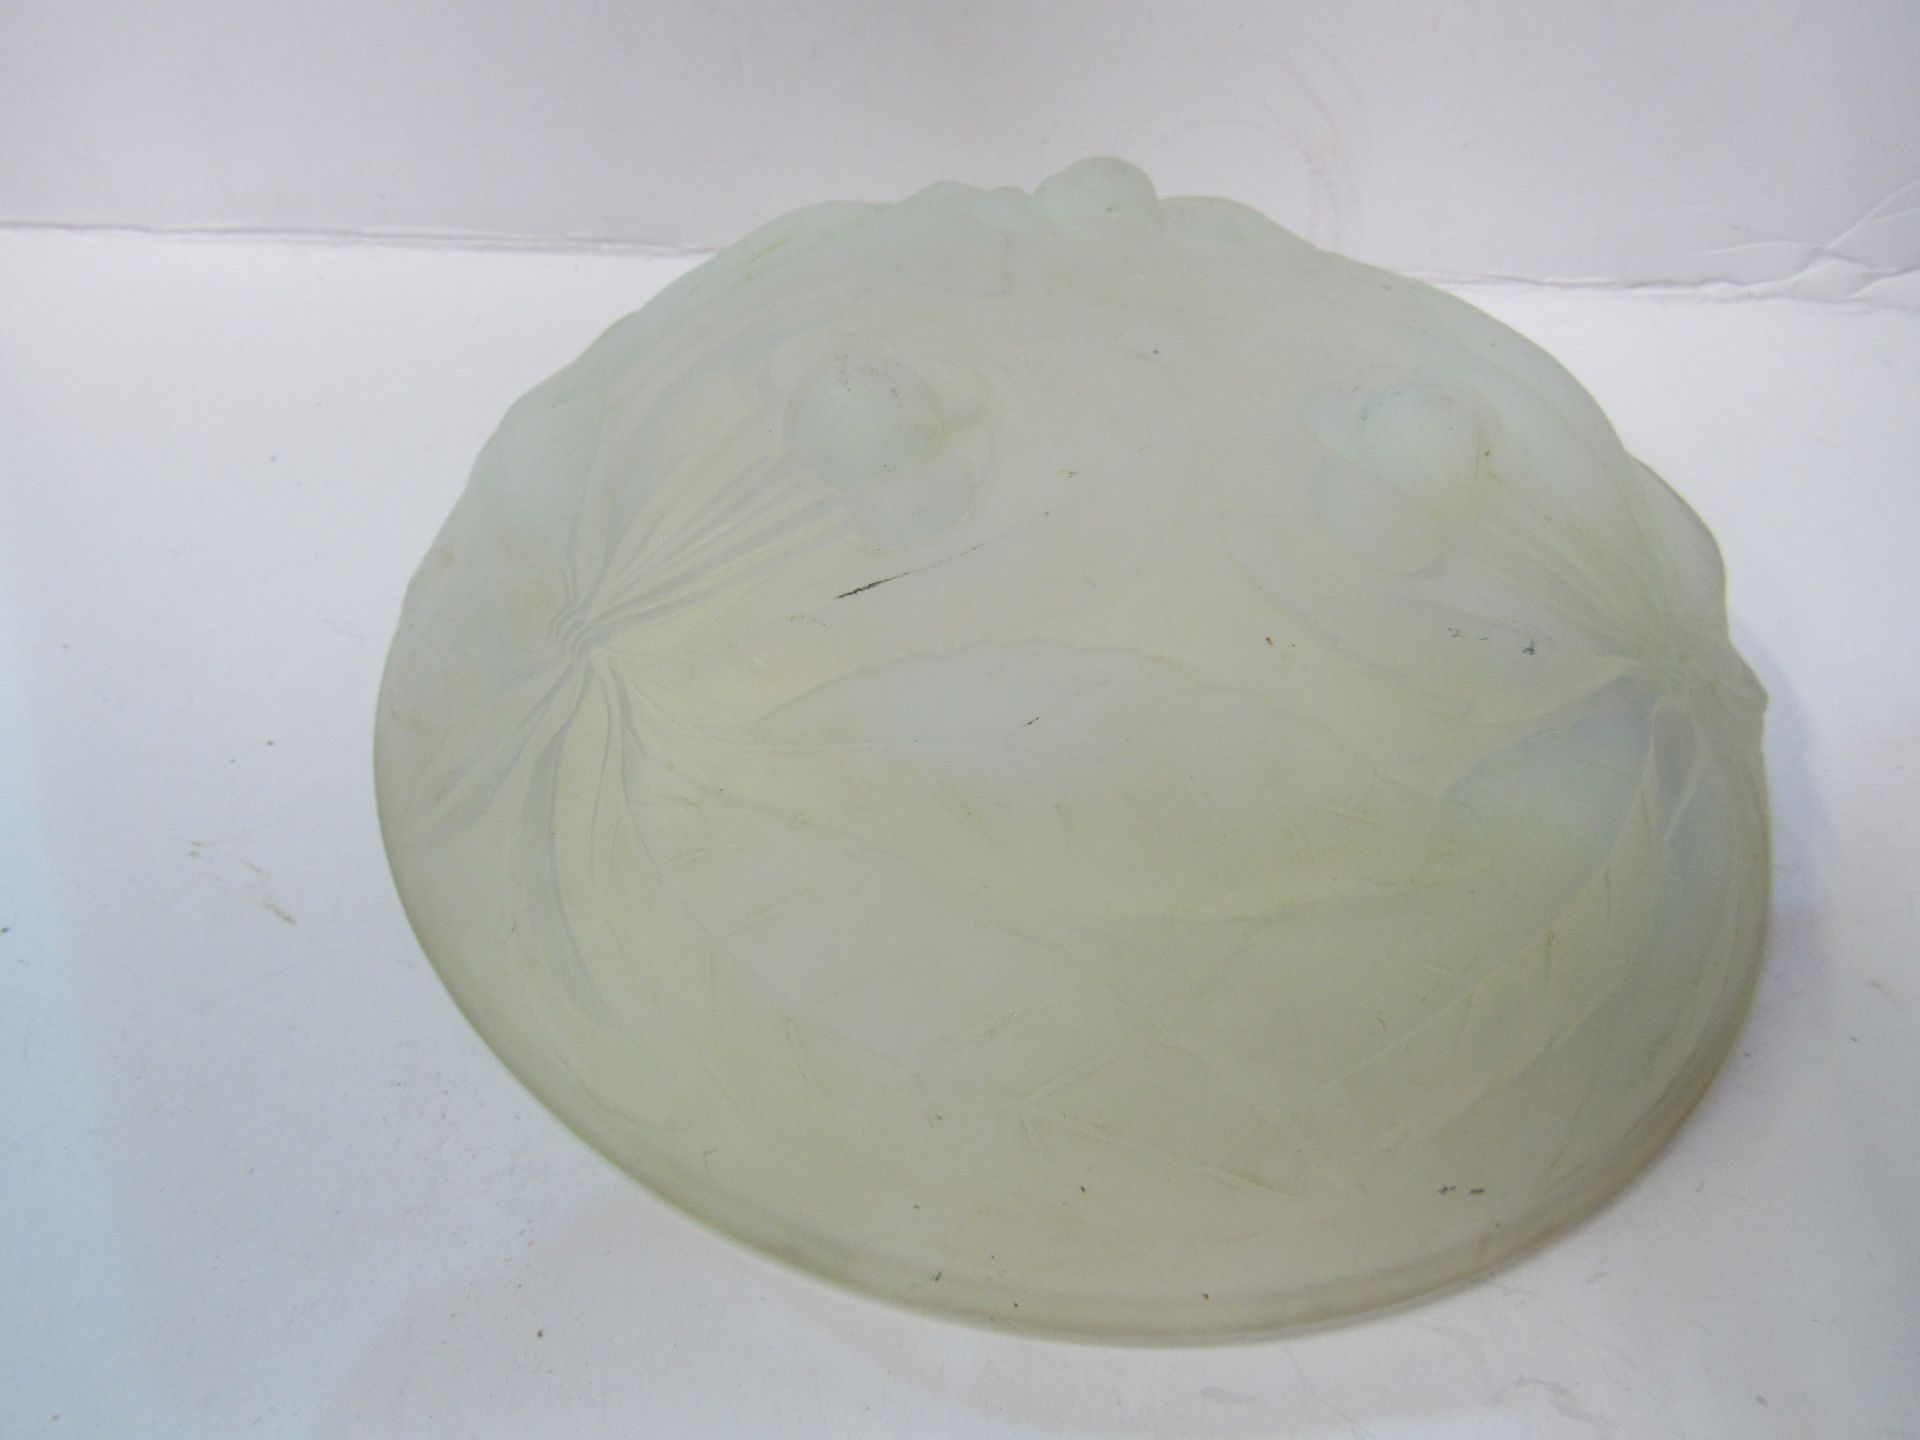 G Vallon opalescent glass bowl, diameter 23cms. Estimate £20-30. - Image 2 of 3